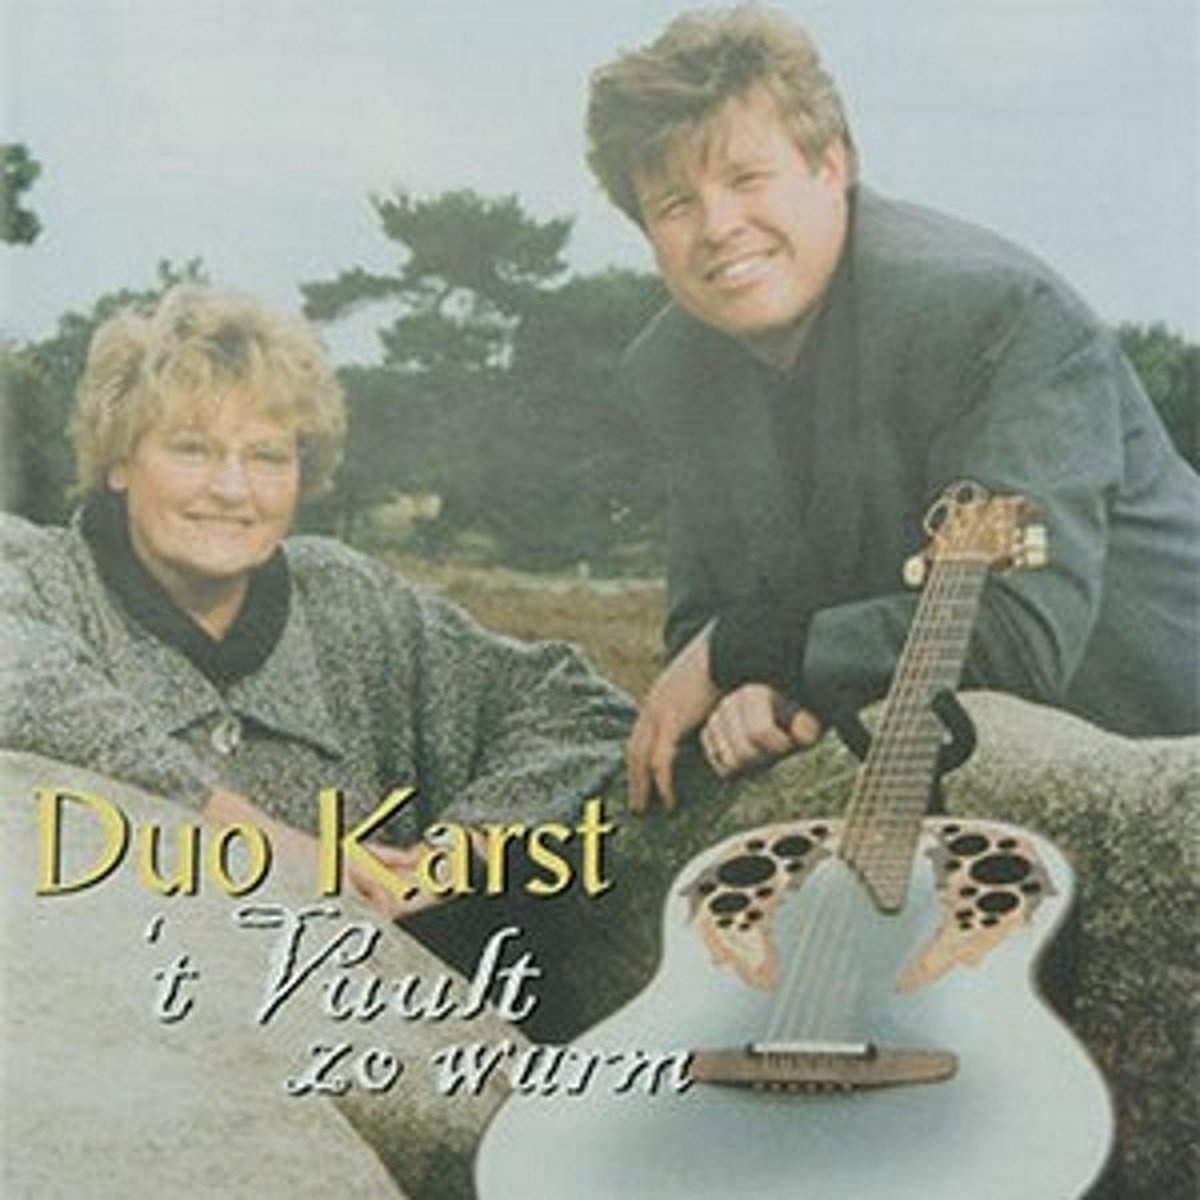 CD Shop - DUO KARST VUULT ZO WARM AS IK DRENTS HEUR